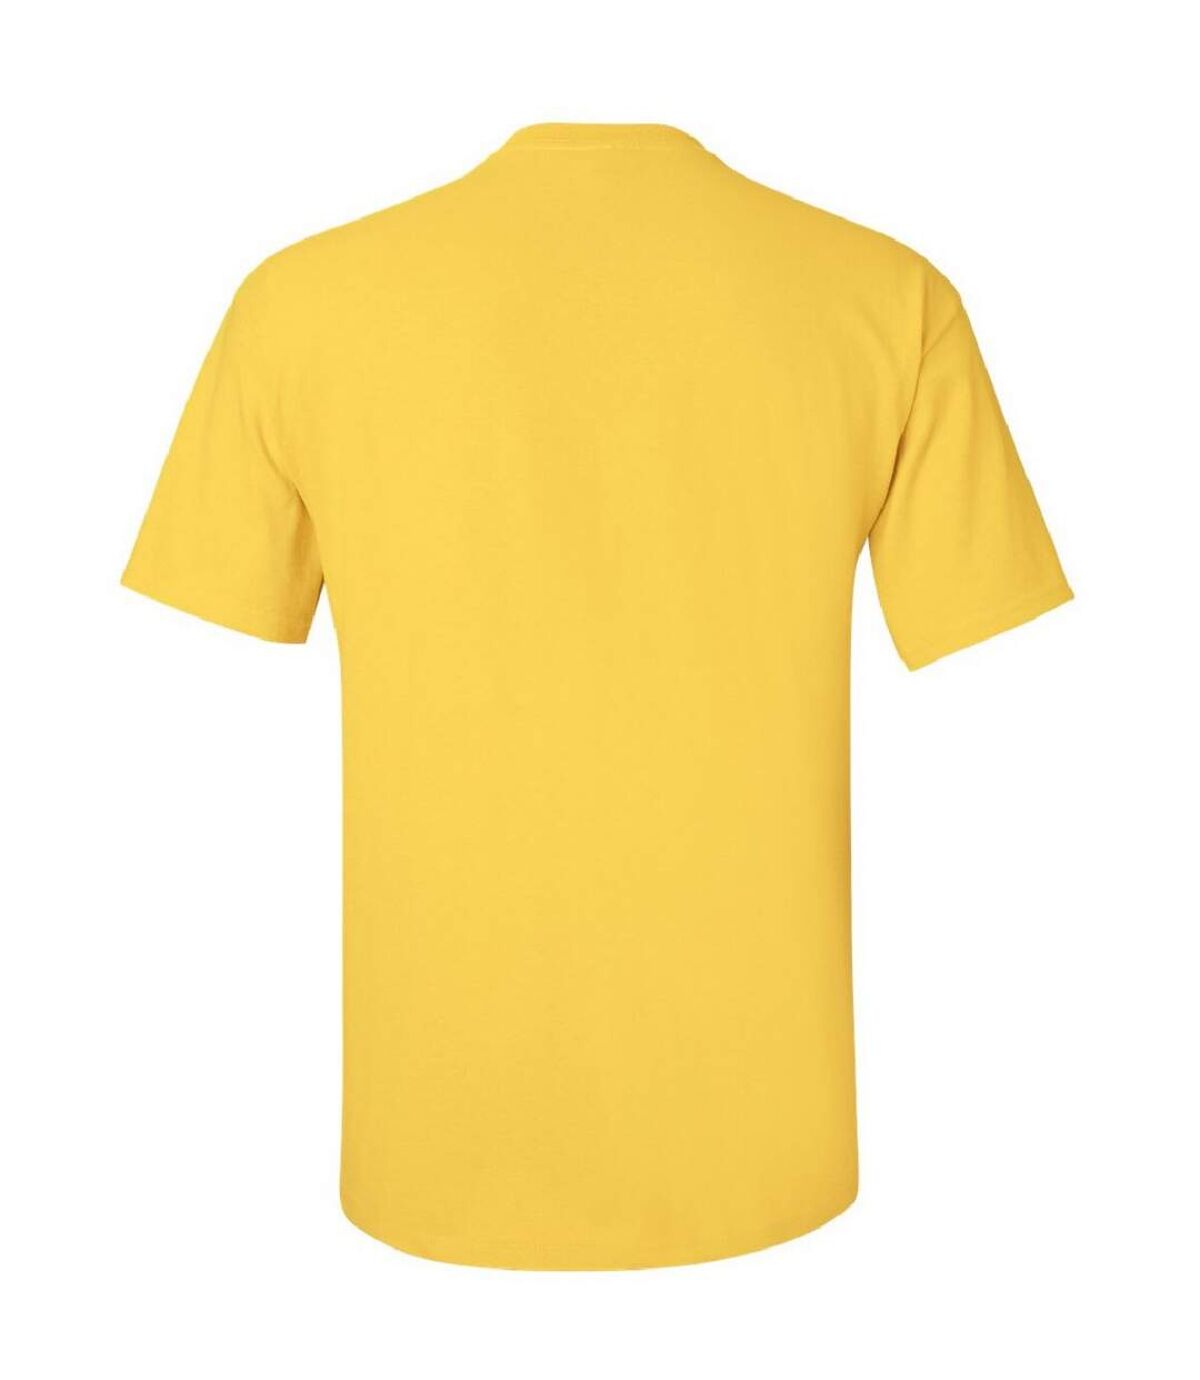 Gildan Mens Ultra Cotton Short Sleeve T-Shirt (Daisy)